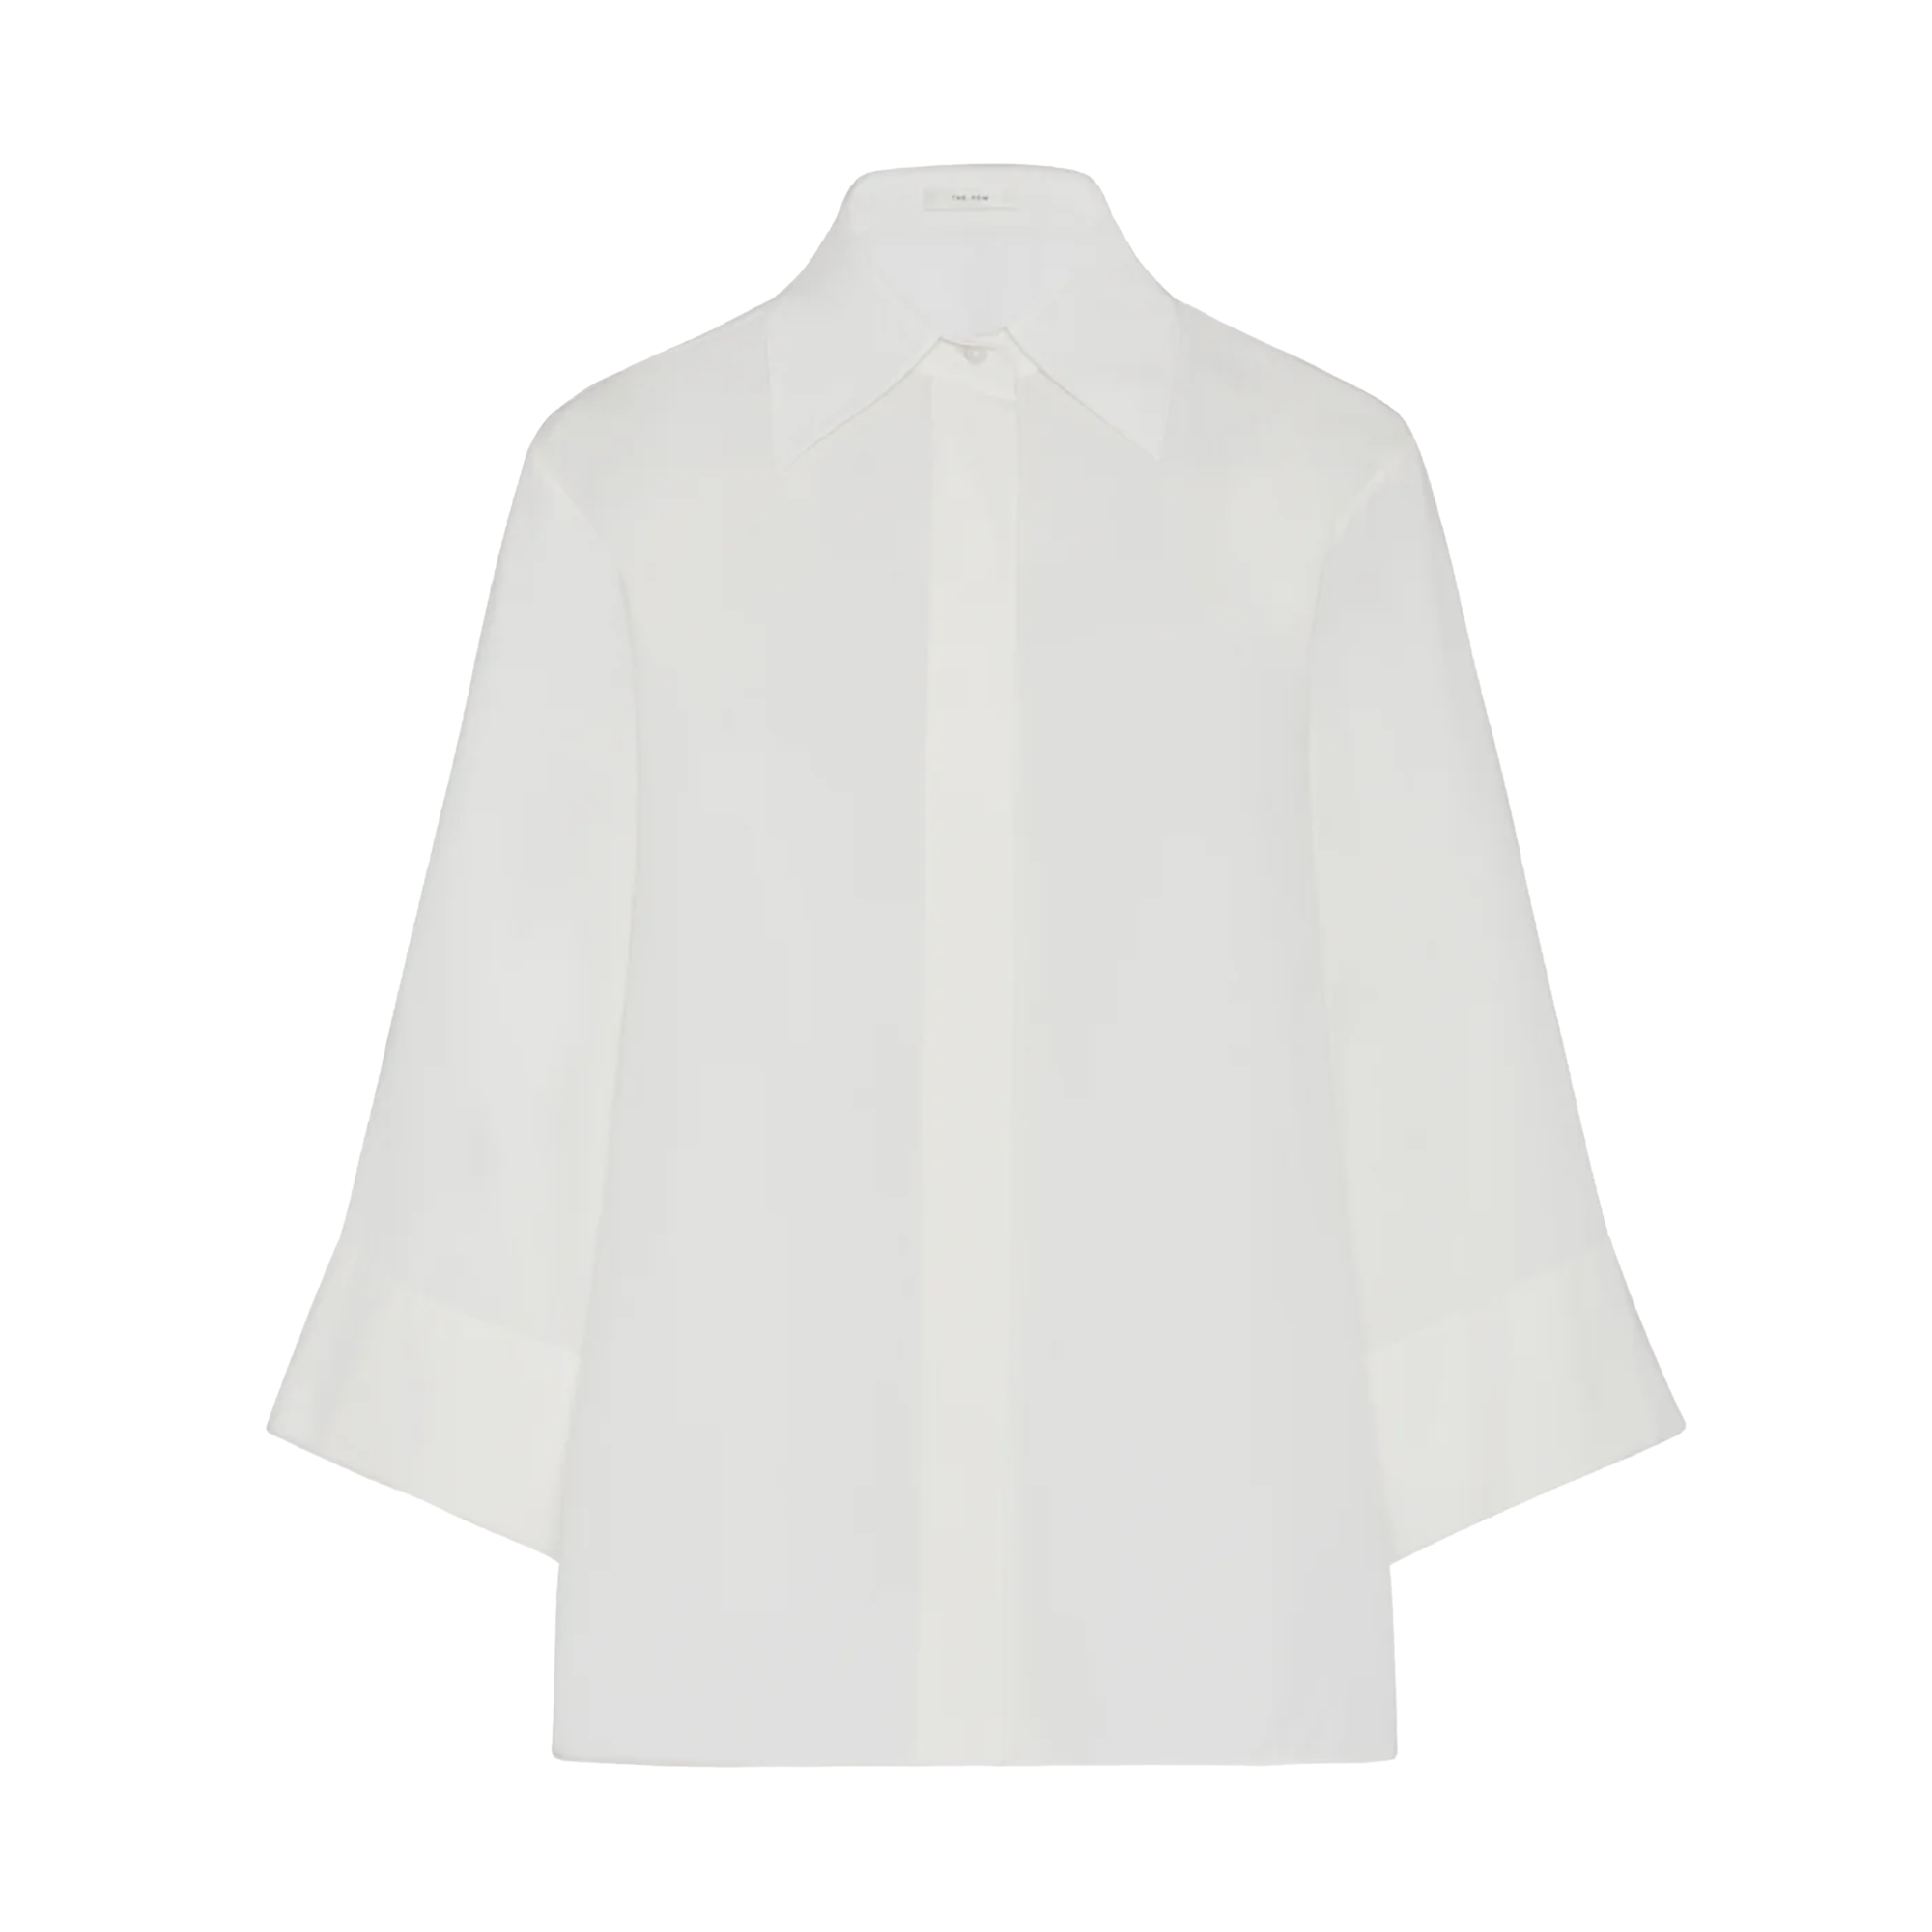 THE ROW - Women's Malvina Shirt  - (White) view 1